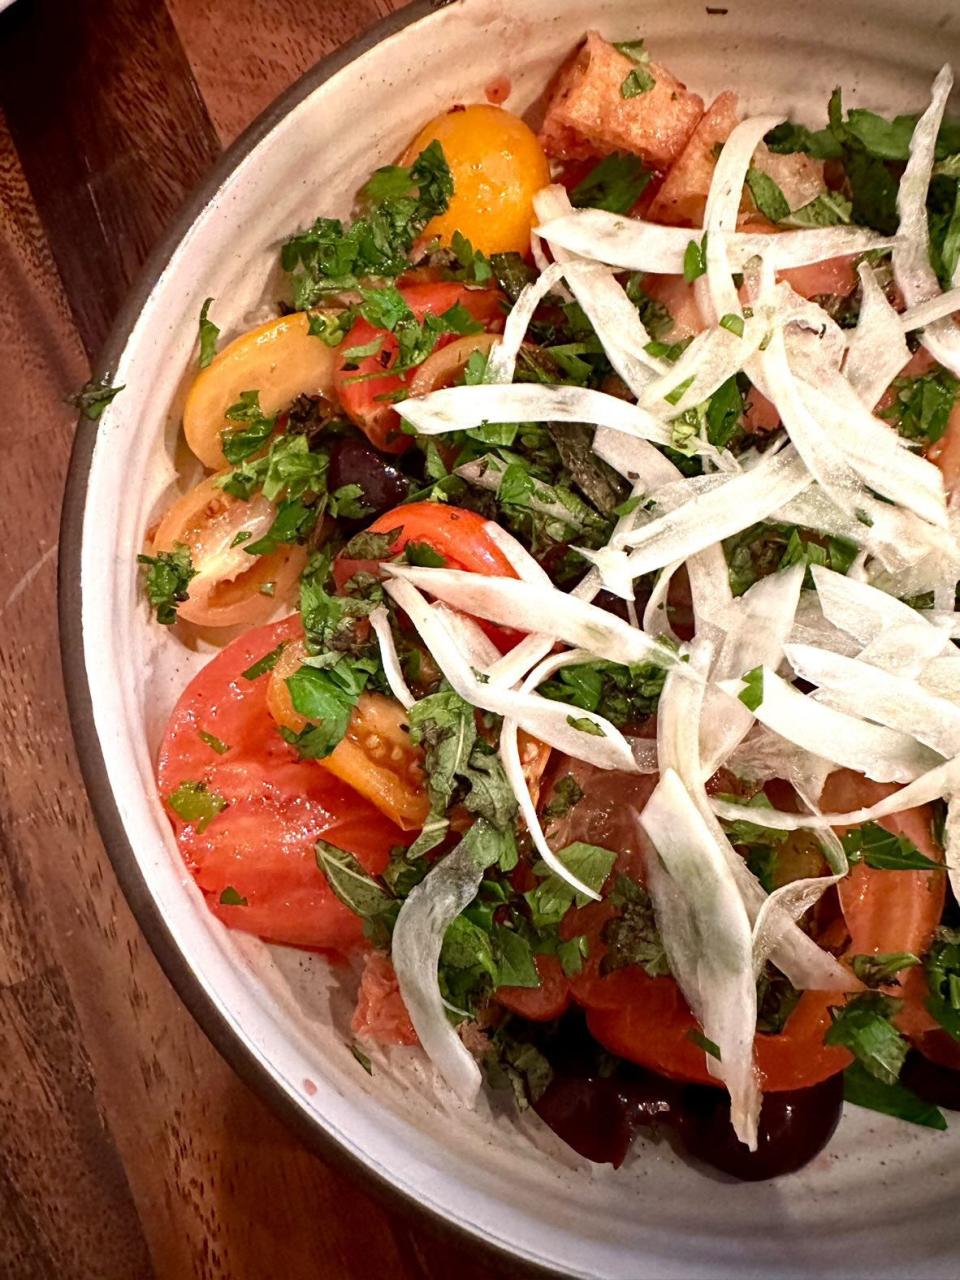 Gioia Mia's panzanella salad is a summer treat